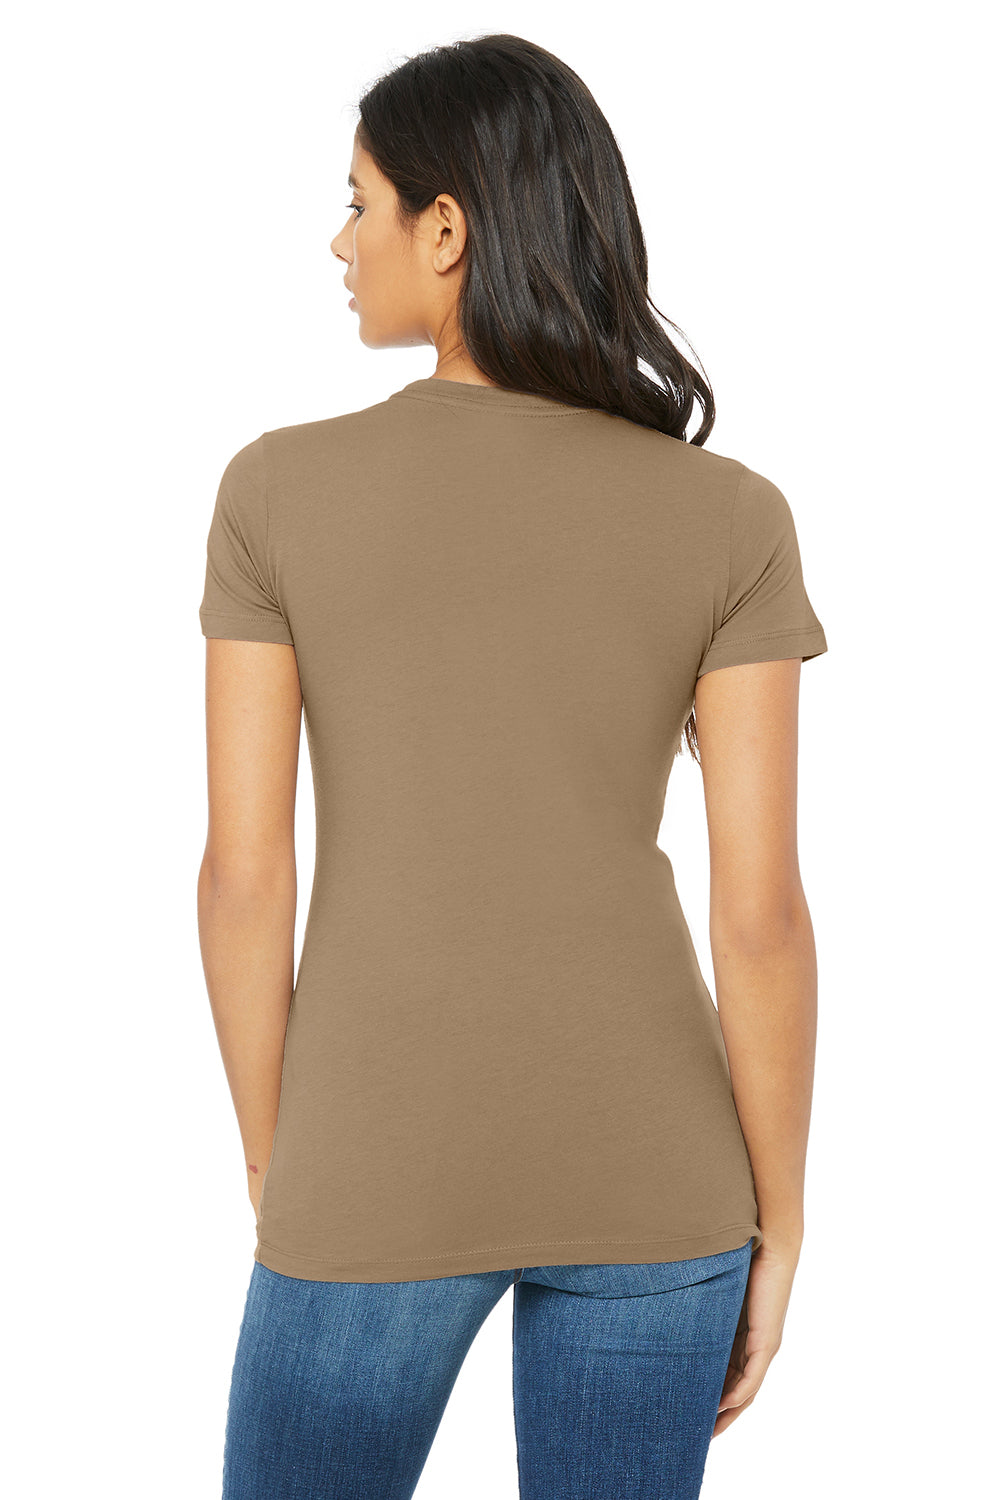 Bella + Canvas 6004 Womens The Favorite Short Sleeve Crewneck T-Shirt Pebble Brown Back